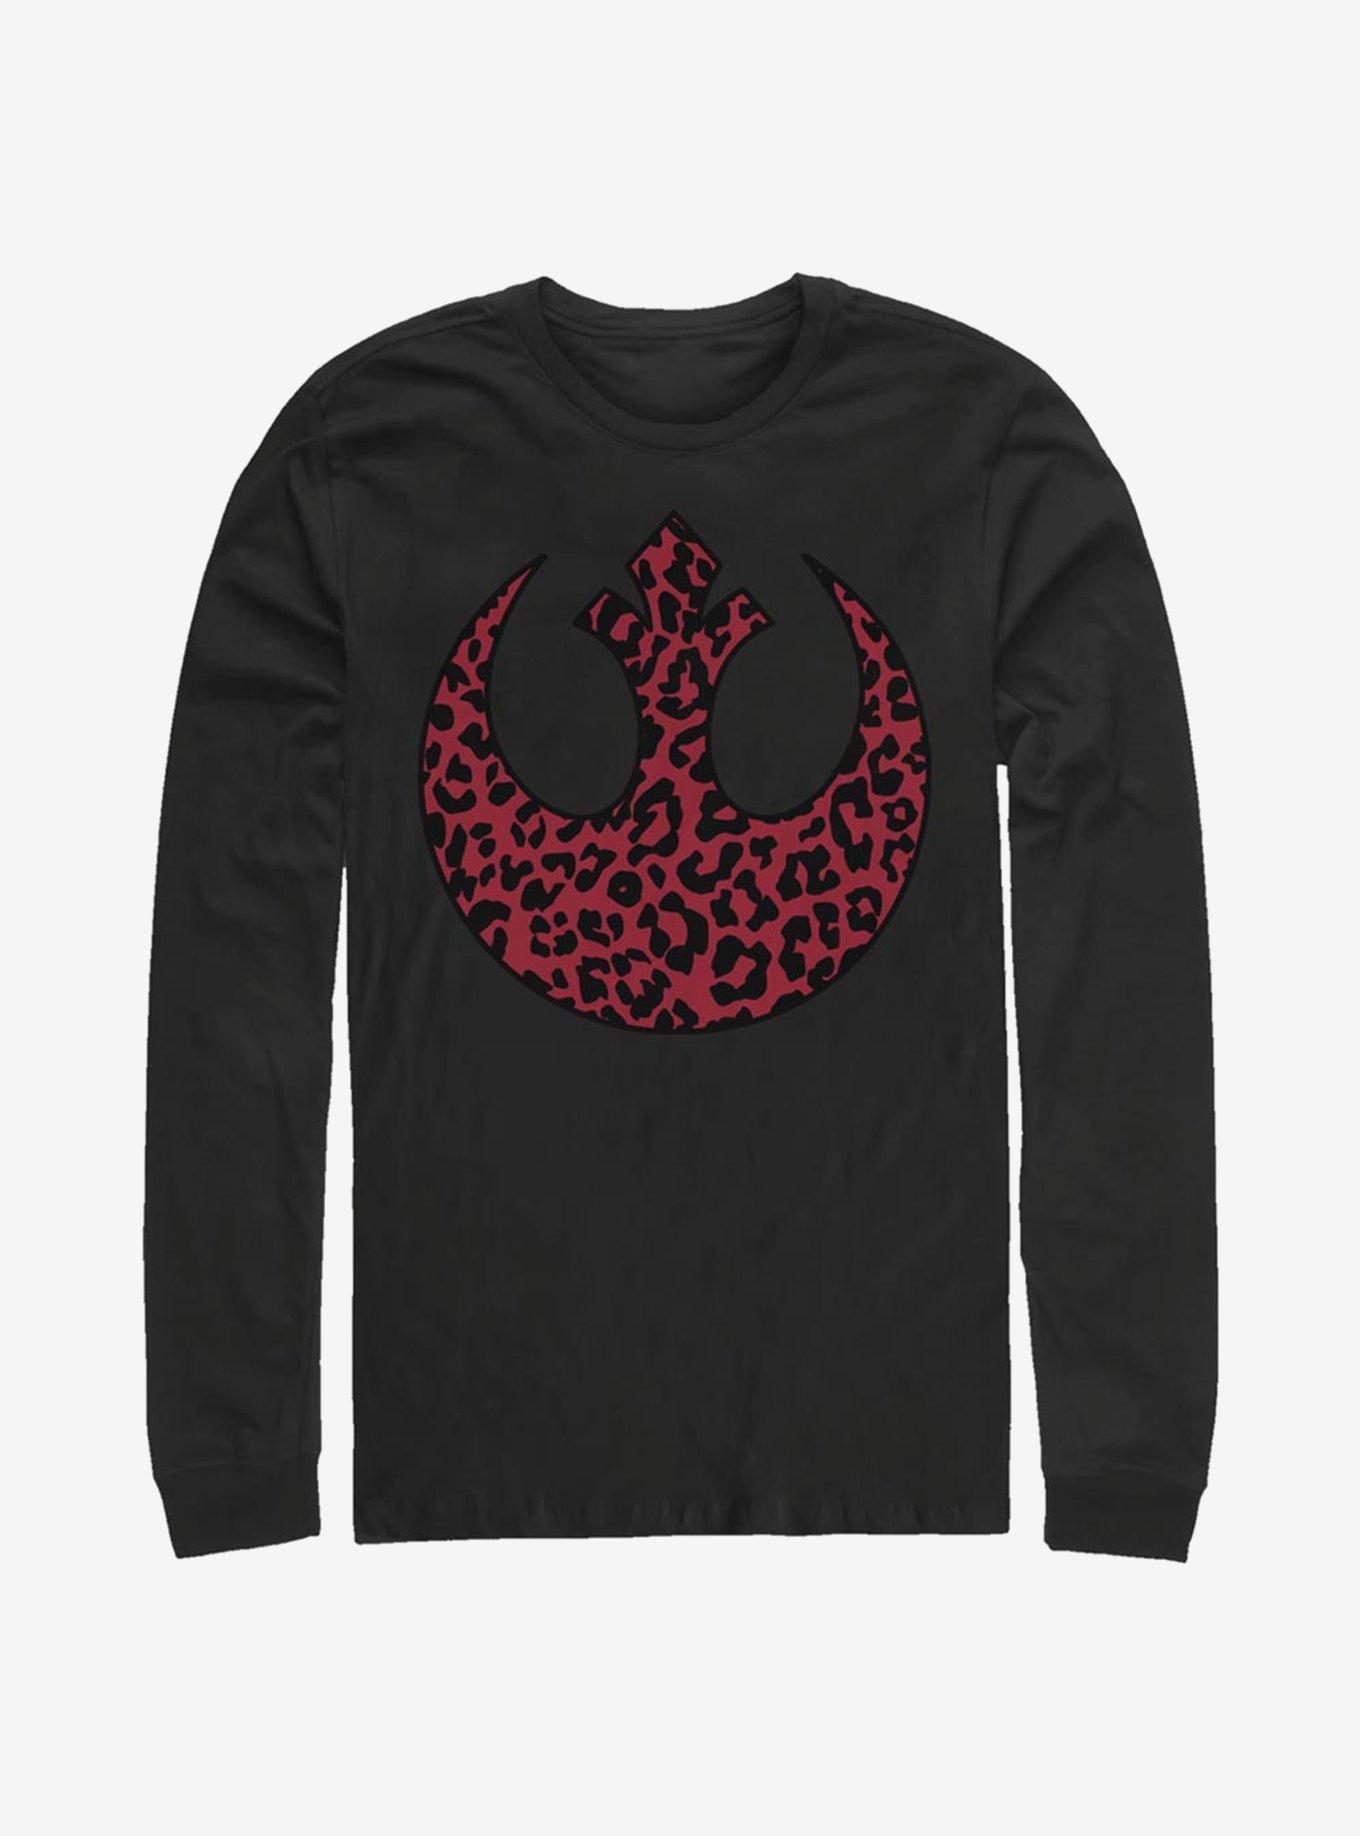 Star Wars Rebel Cheetah Long-Sleeve T-Shirt, BLACK, hi-res